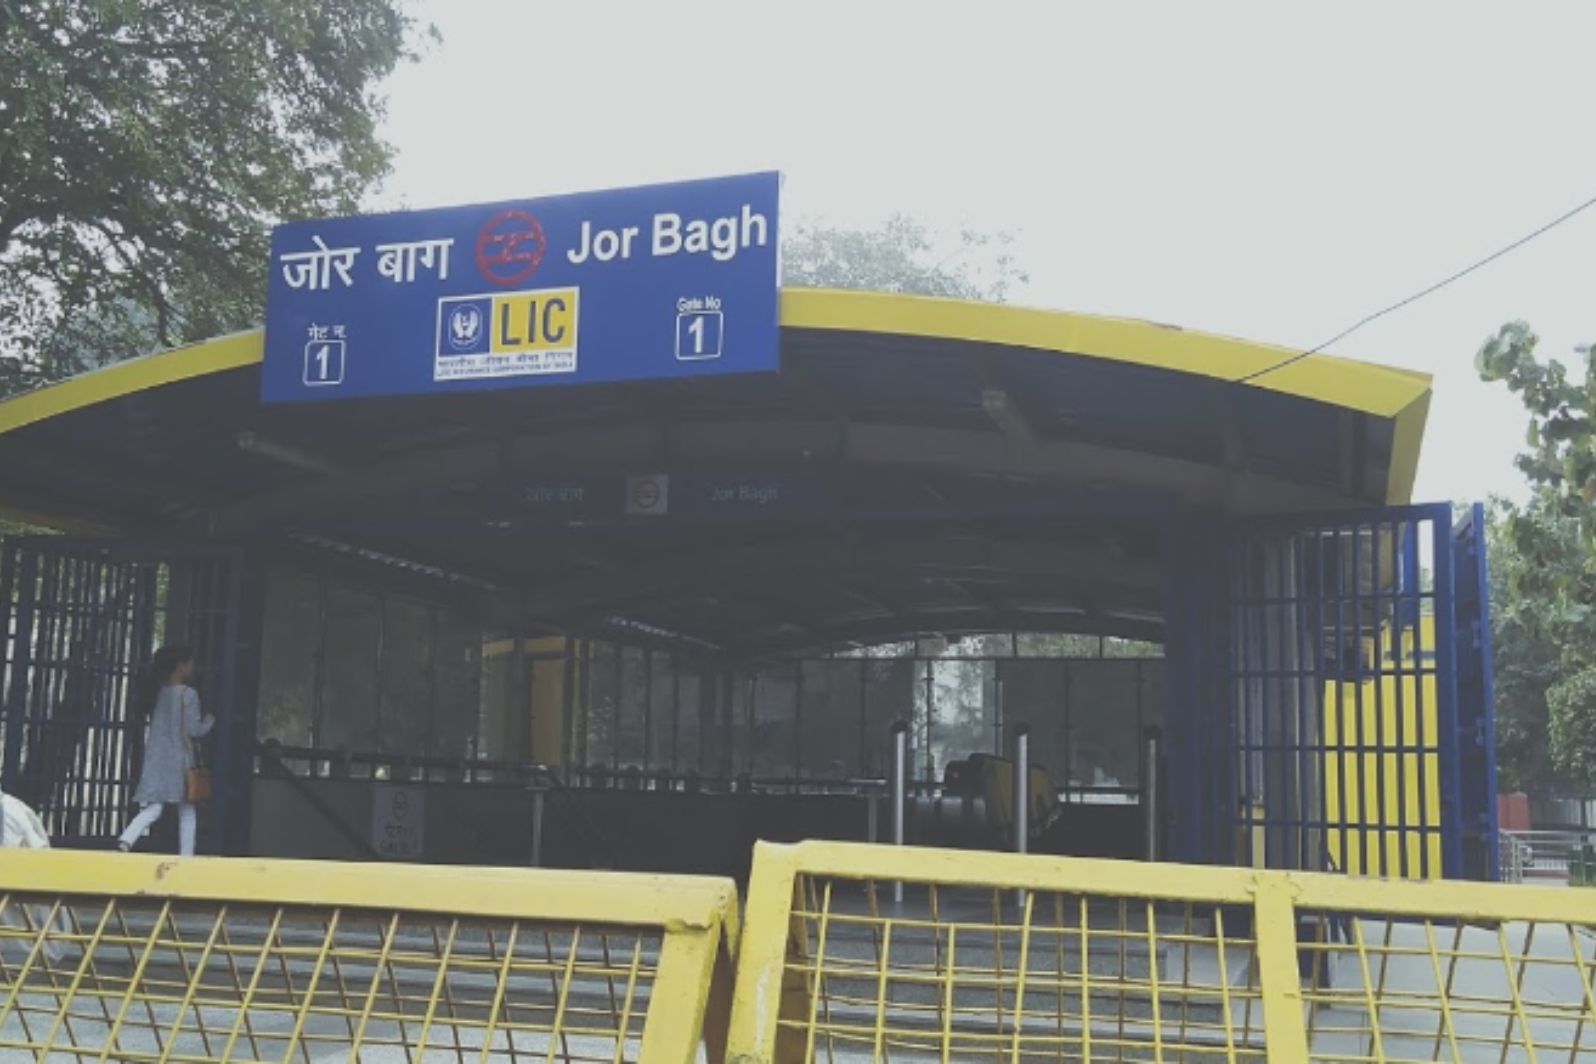 jor bagh metro station gate no 1 new delhi